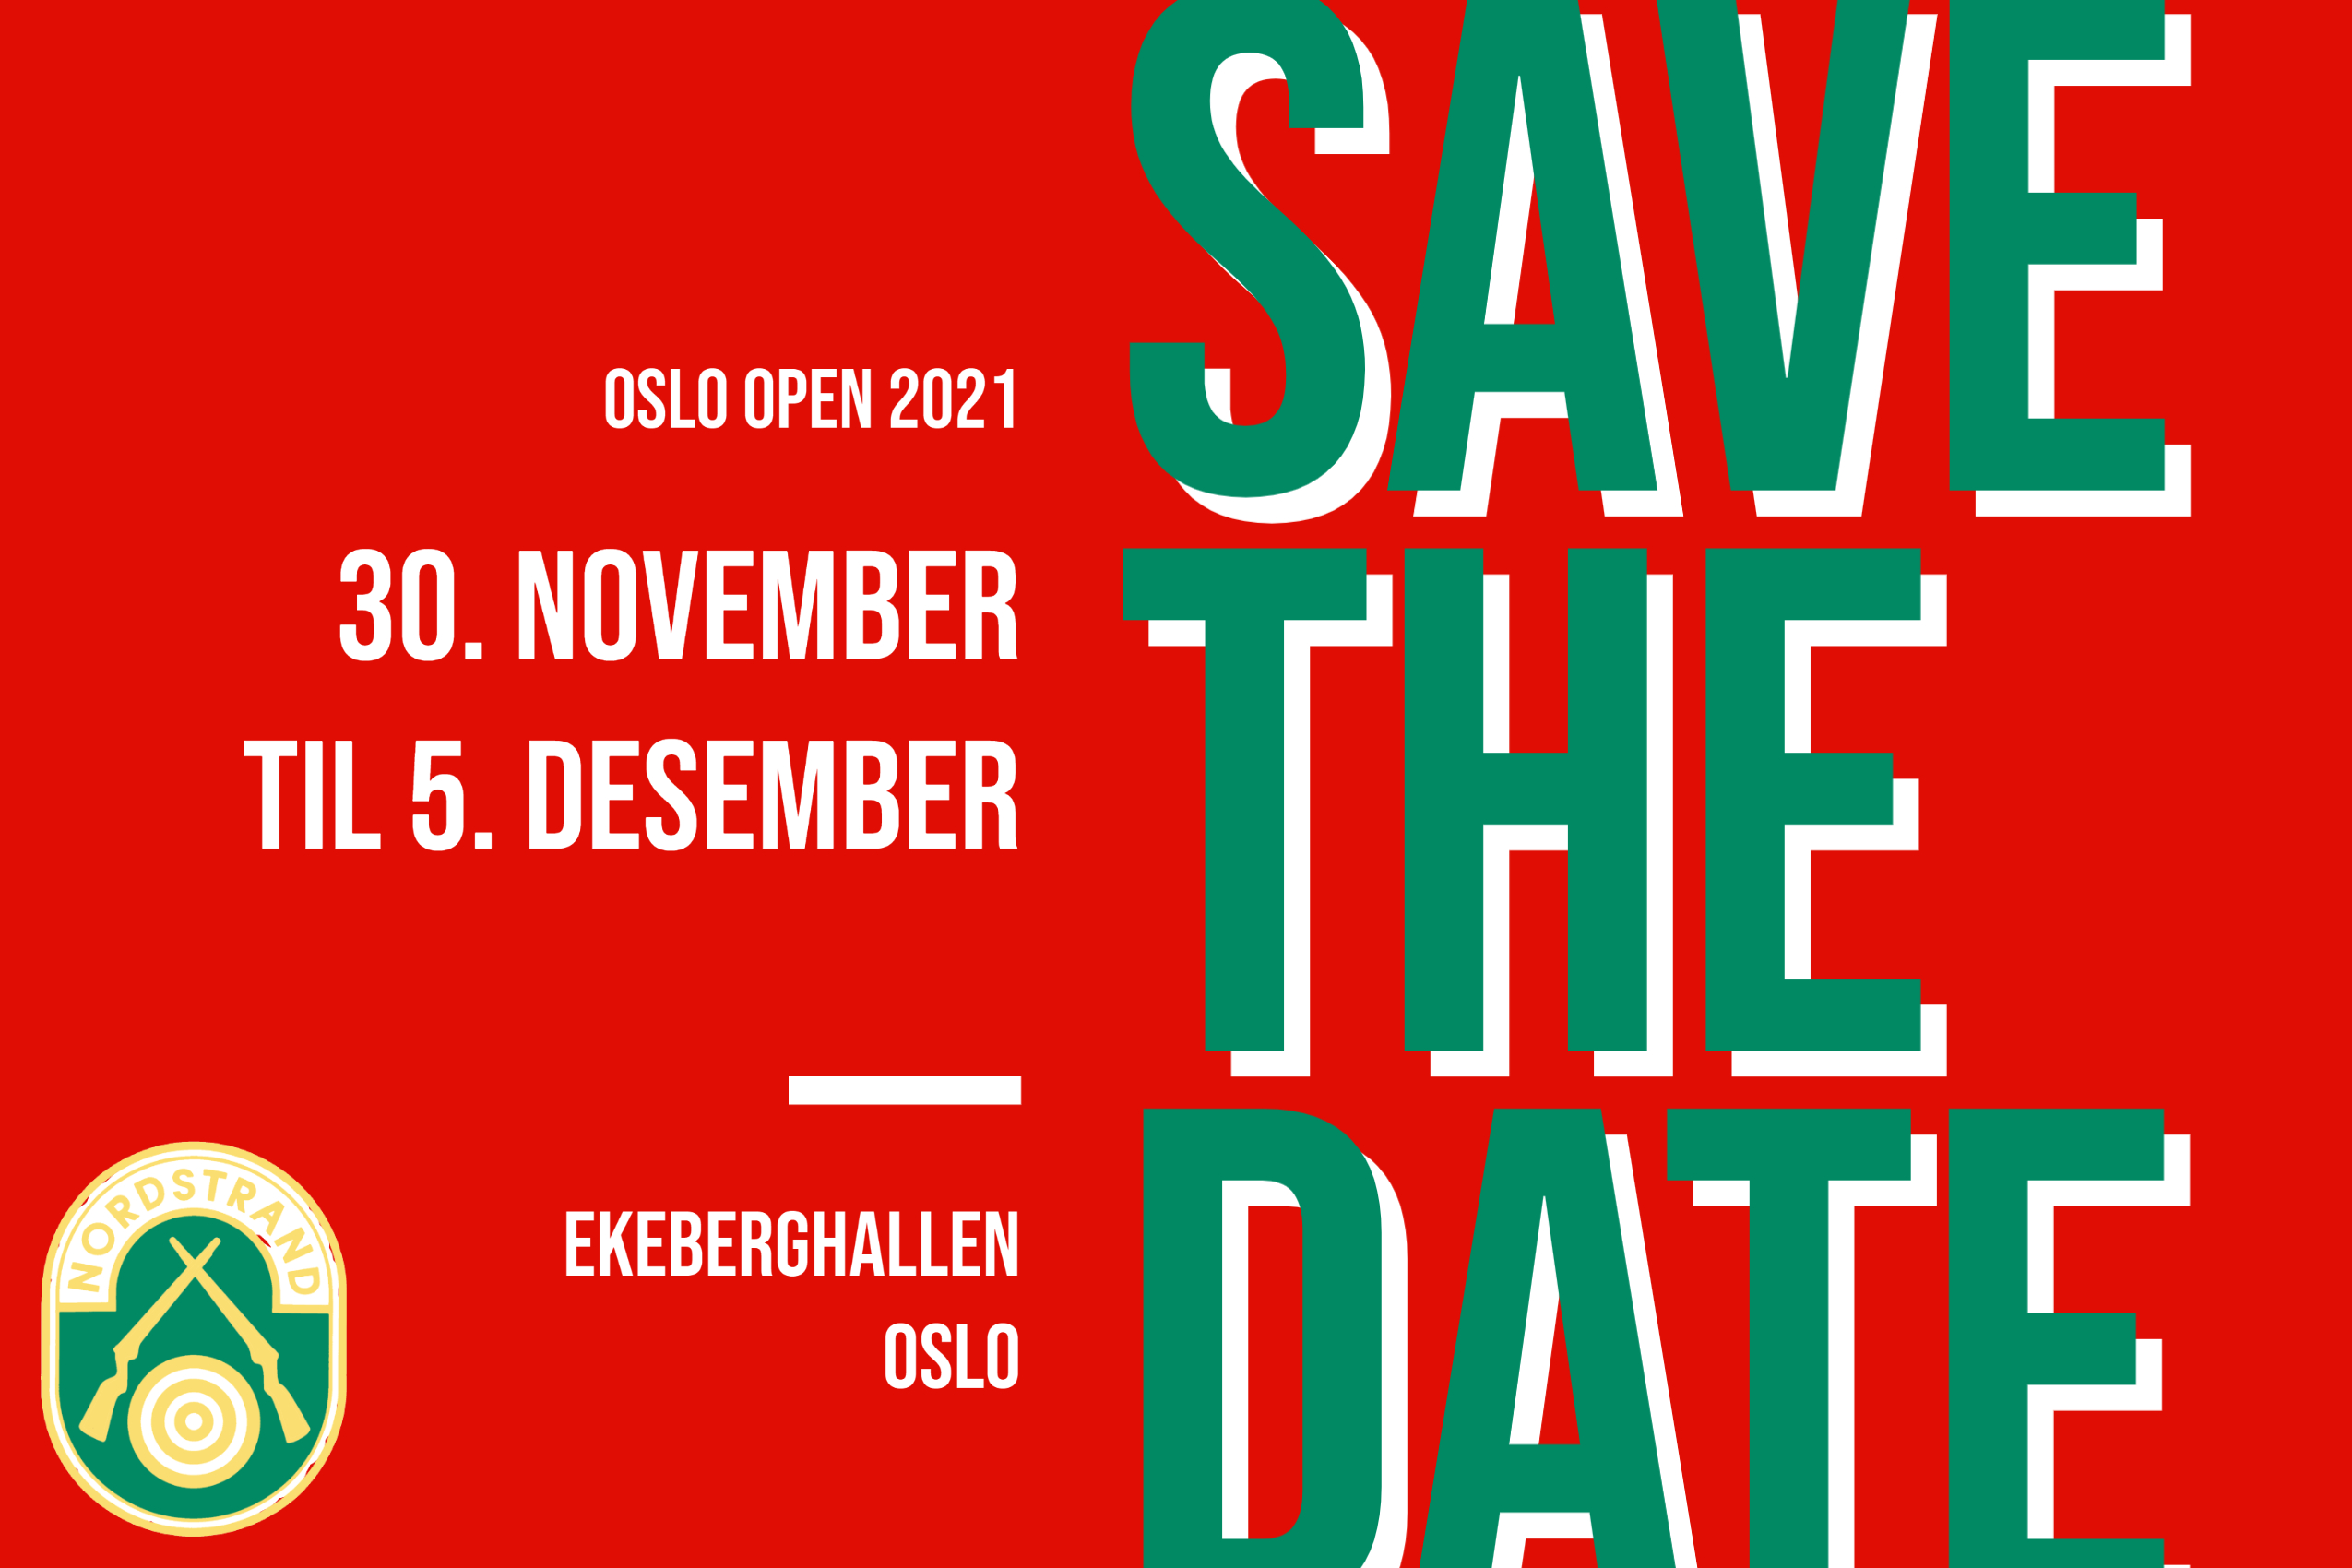 Oslo open poster.jpg